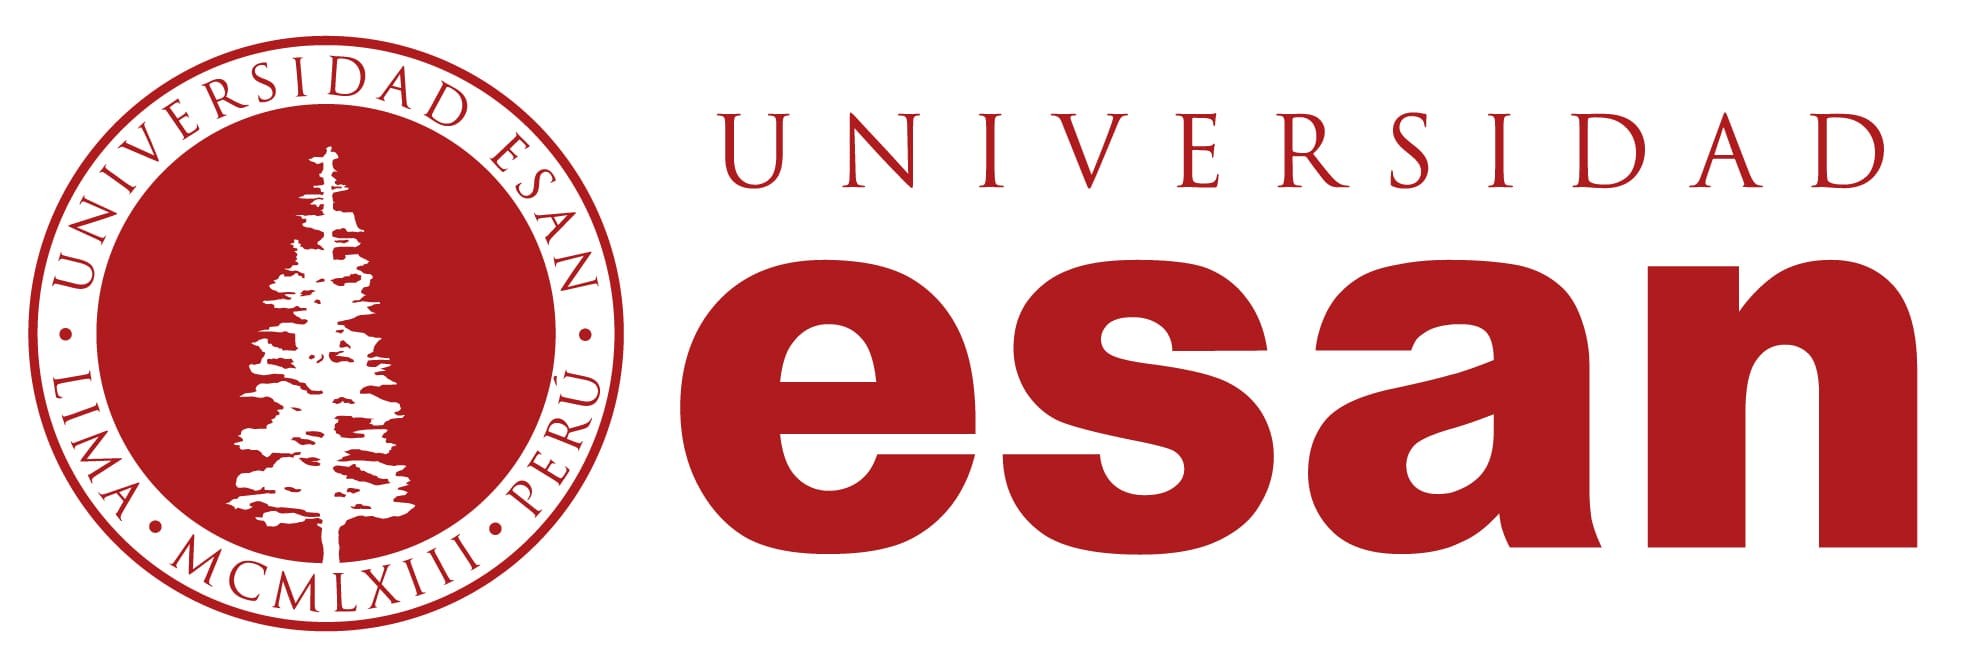 Universidad ESAN